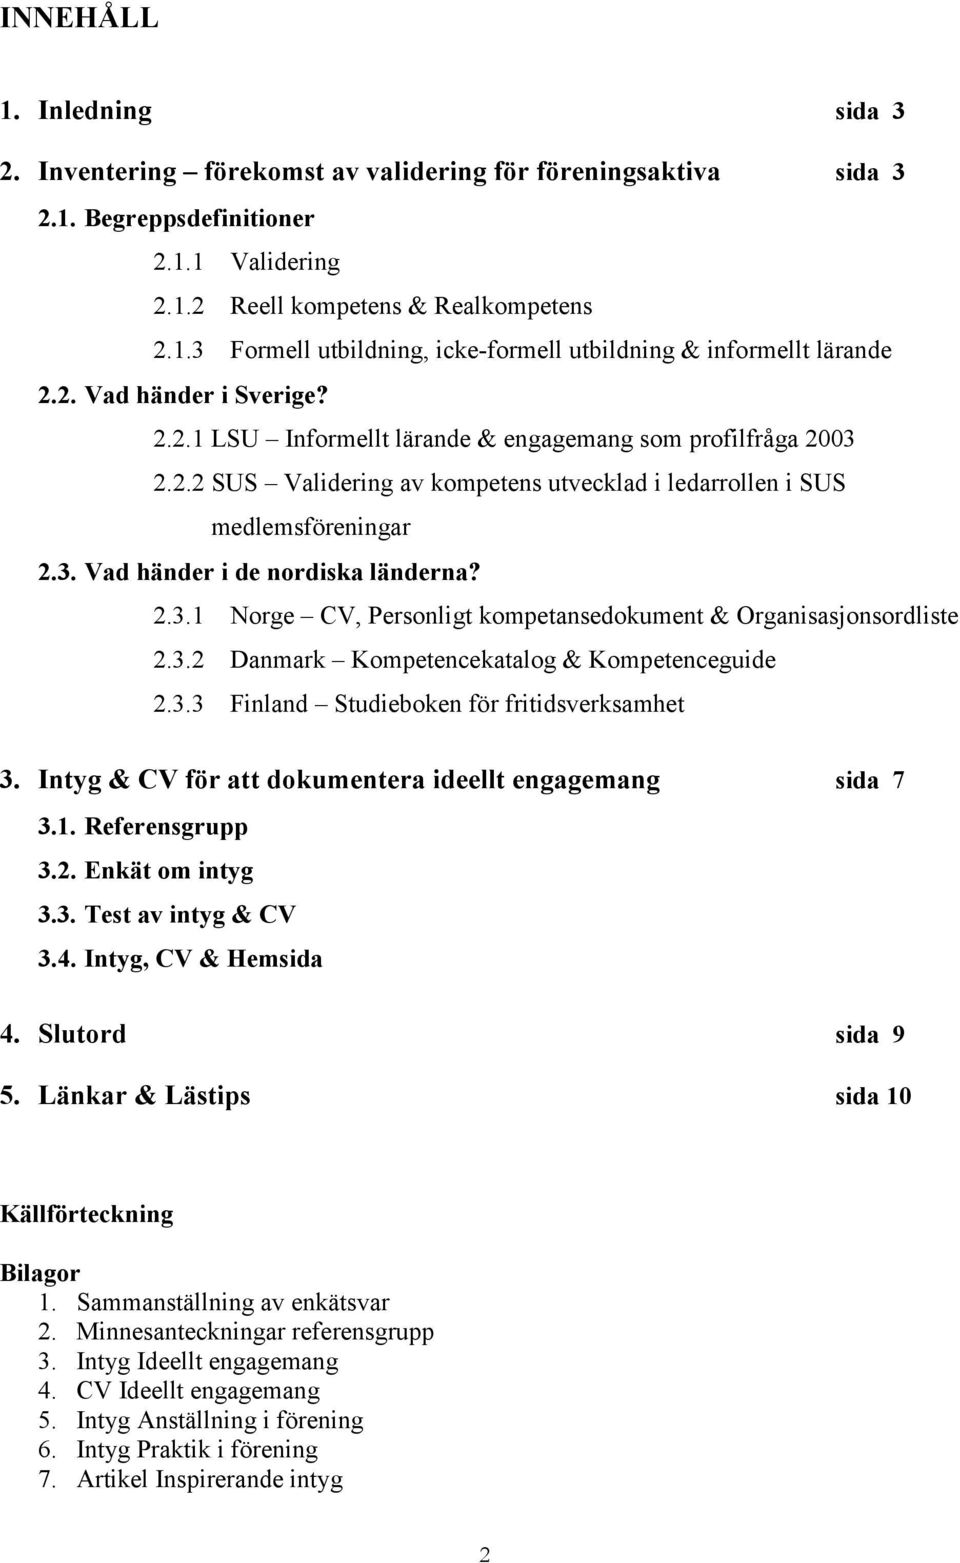 2.3.1 Norge CV, Personligt kompetansedokument & Organisasjonsordliste 2.3.2 Danmark Kompetencekatalog & Kompetenceguide 2.3.3 Finland Studieboken för fritidsverksamhet 3.